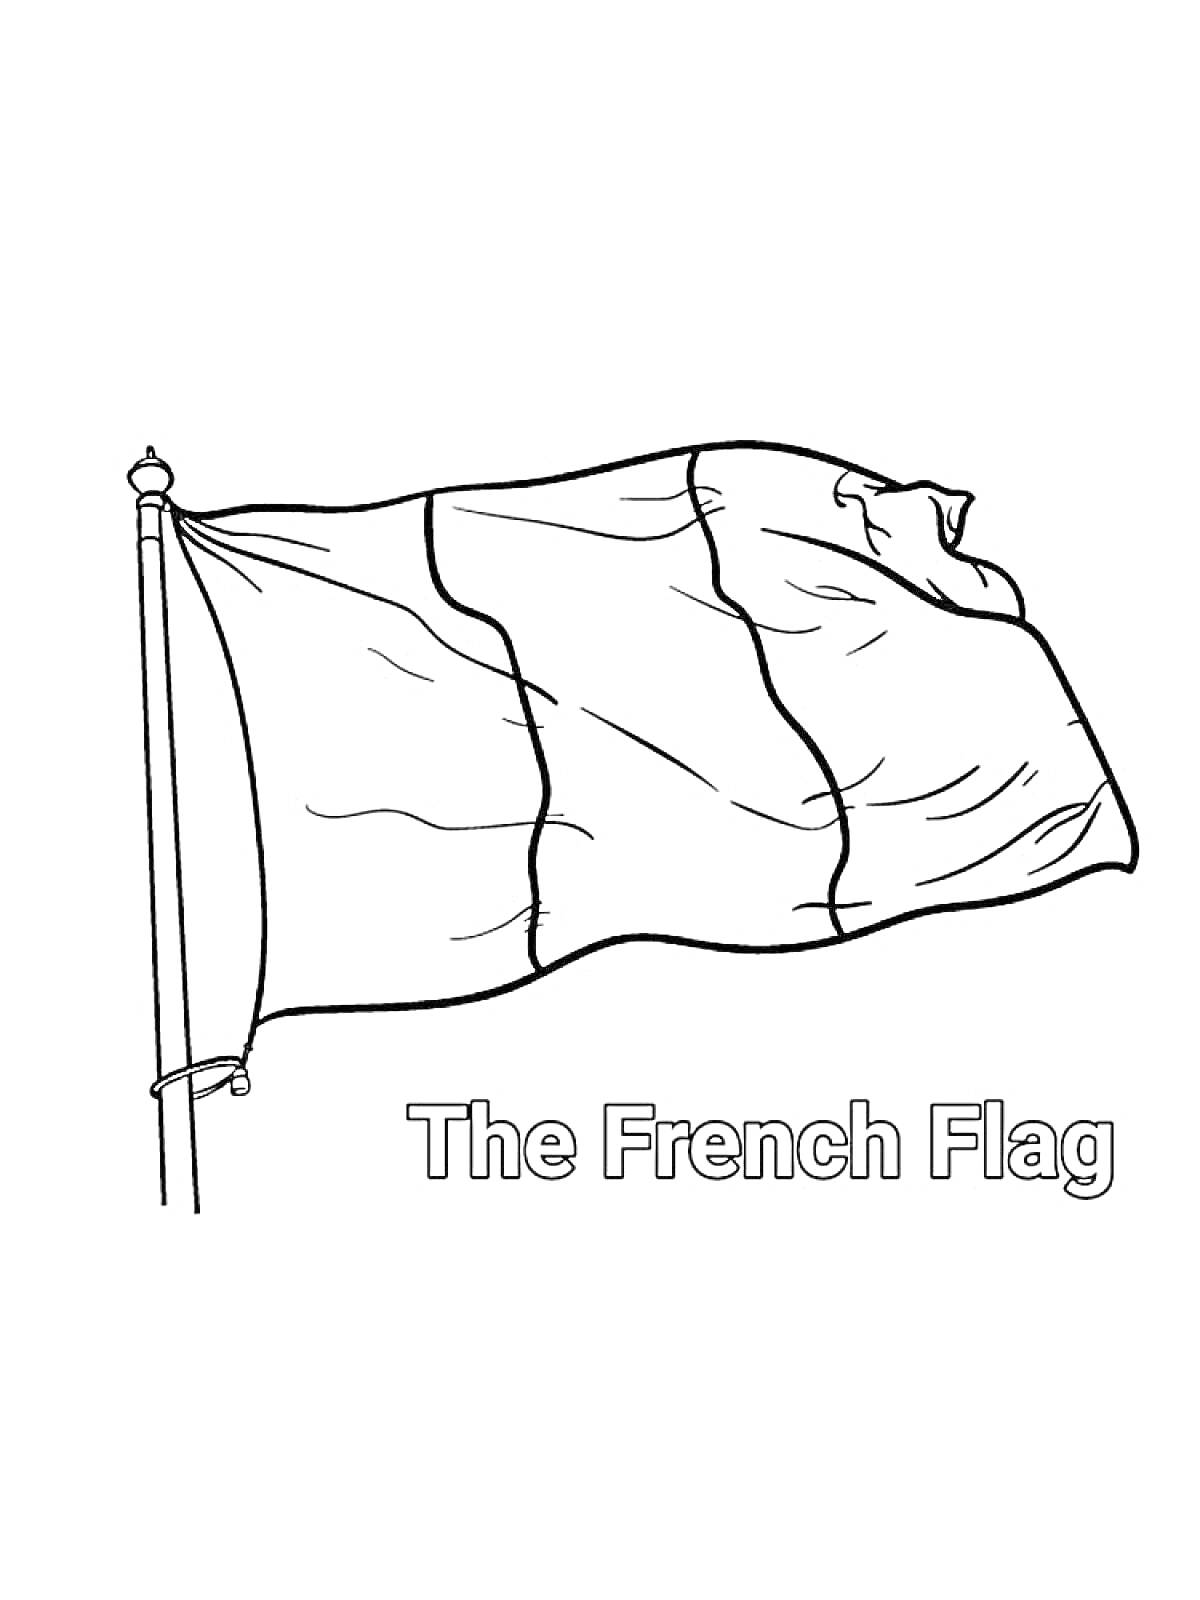 Флаг Франции, развивающийся на флагштоке с надписью 